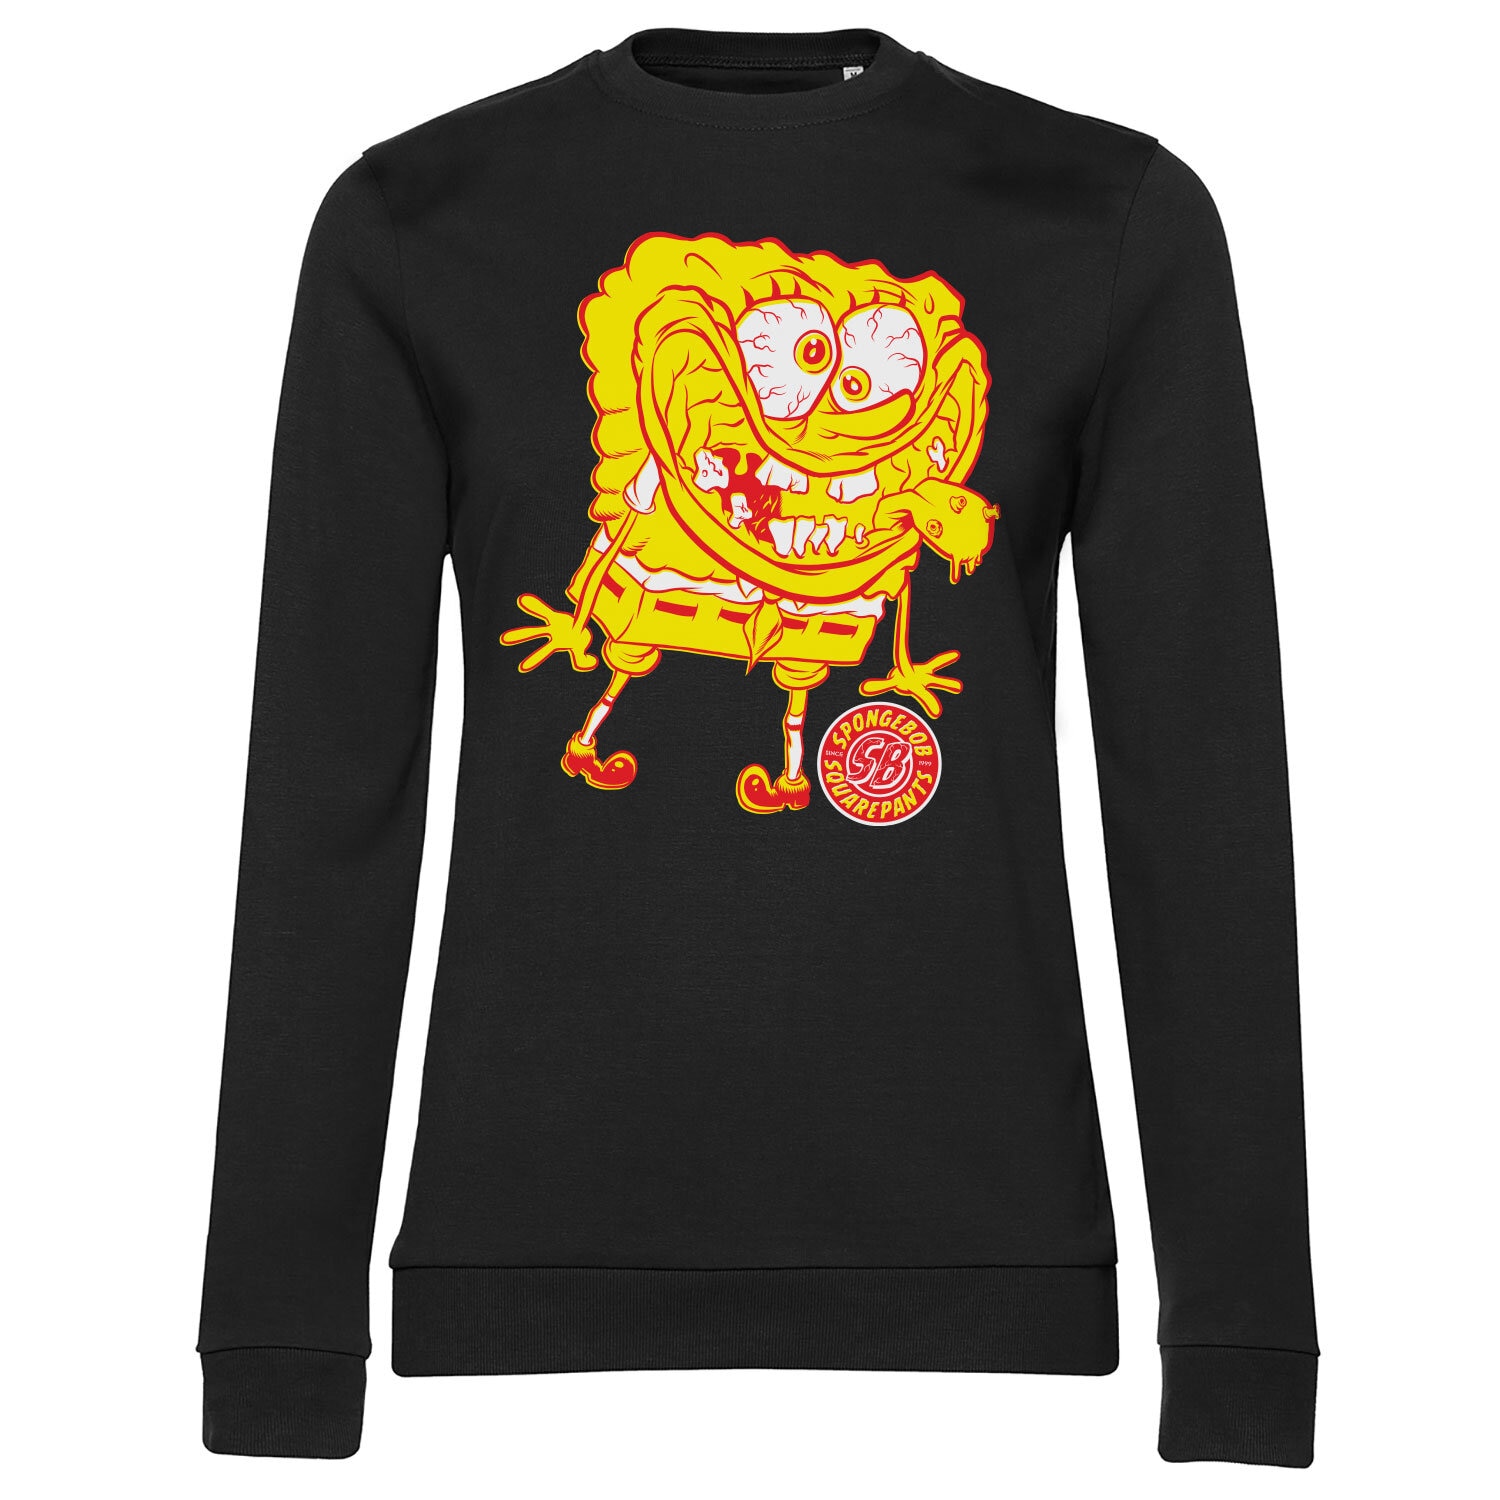 Spongebob Squarepants - Weird Girly Sweatshirt